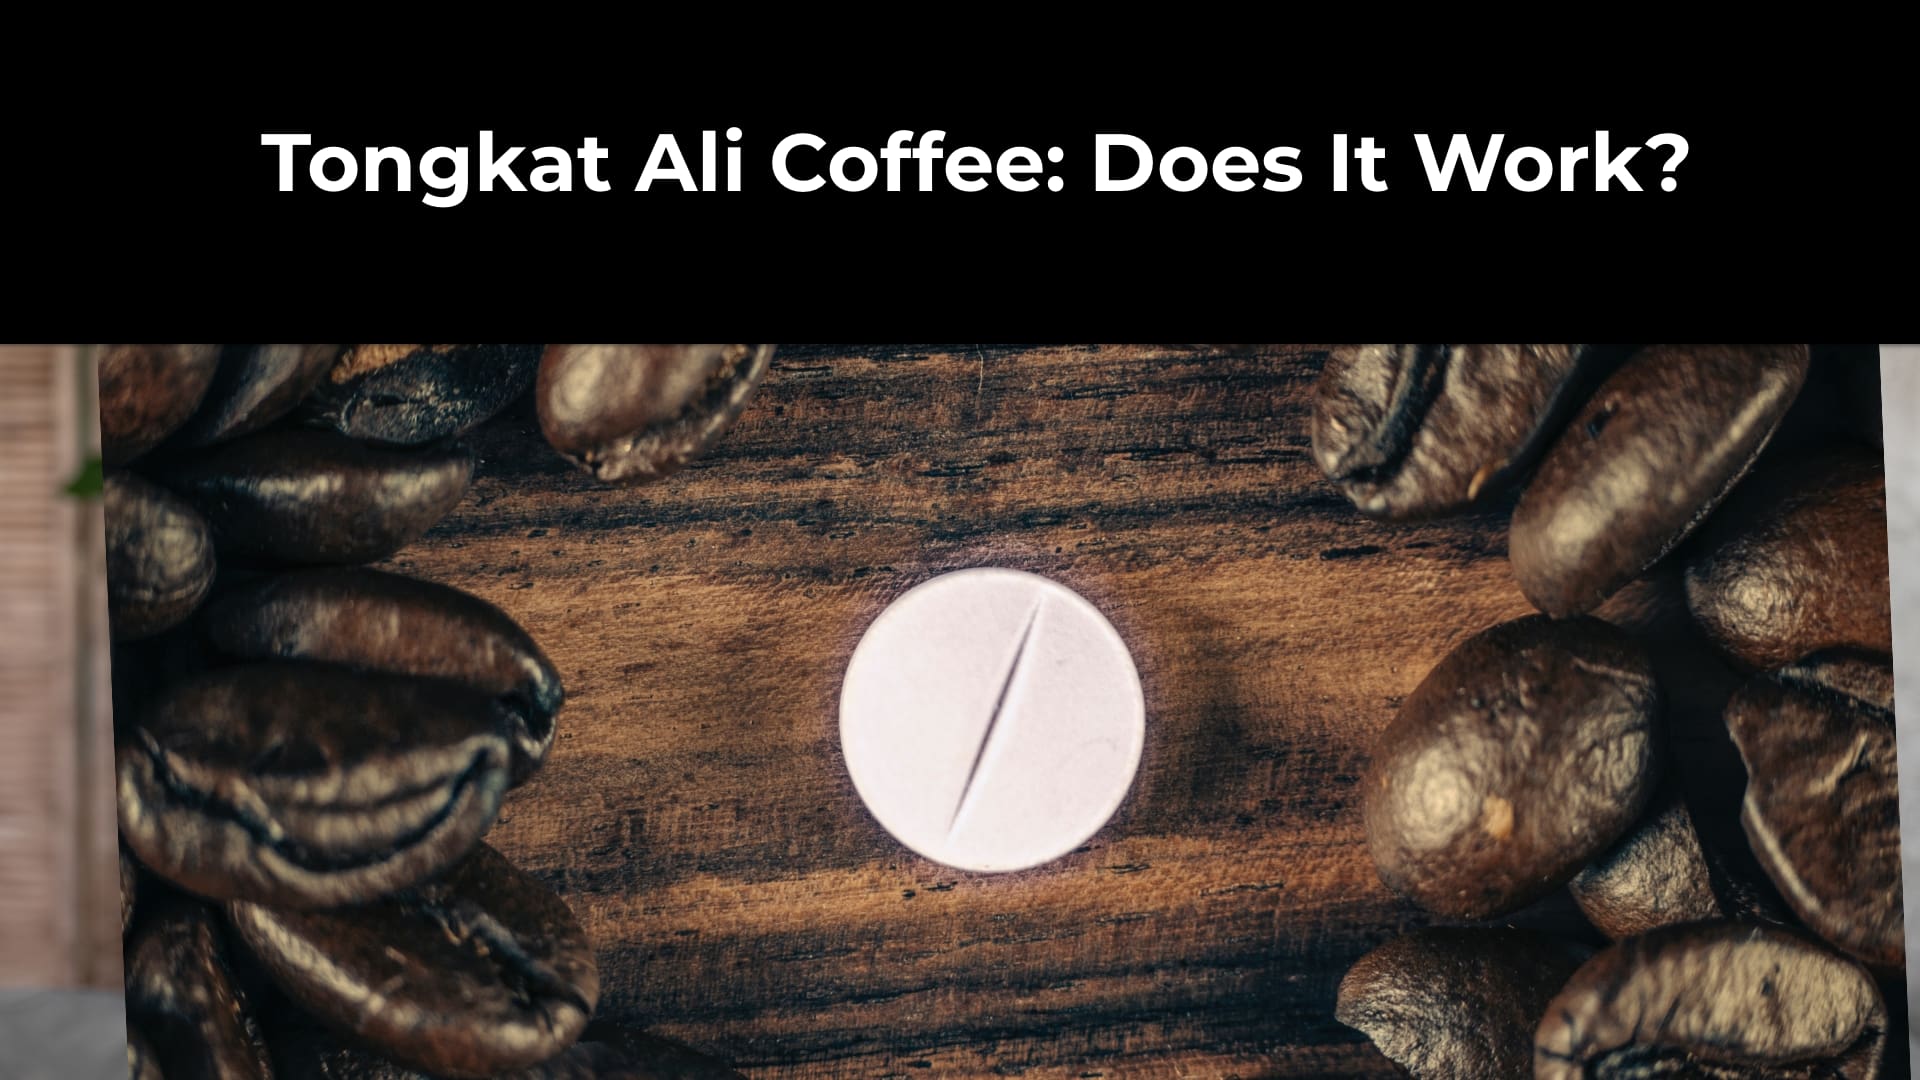 Tongkat Ali Coffee: Does It Work?